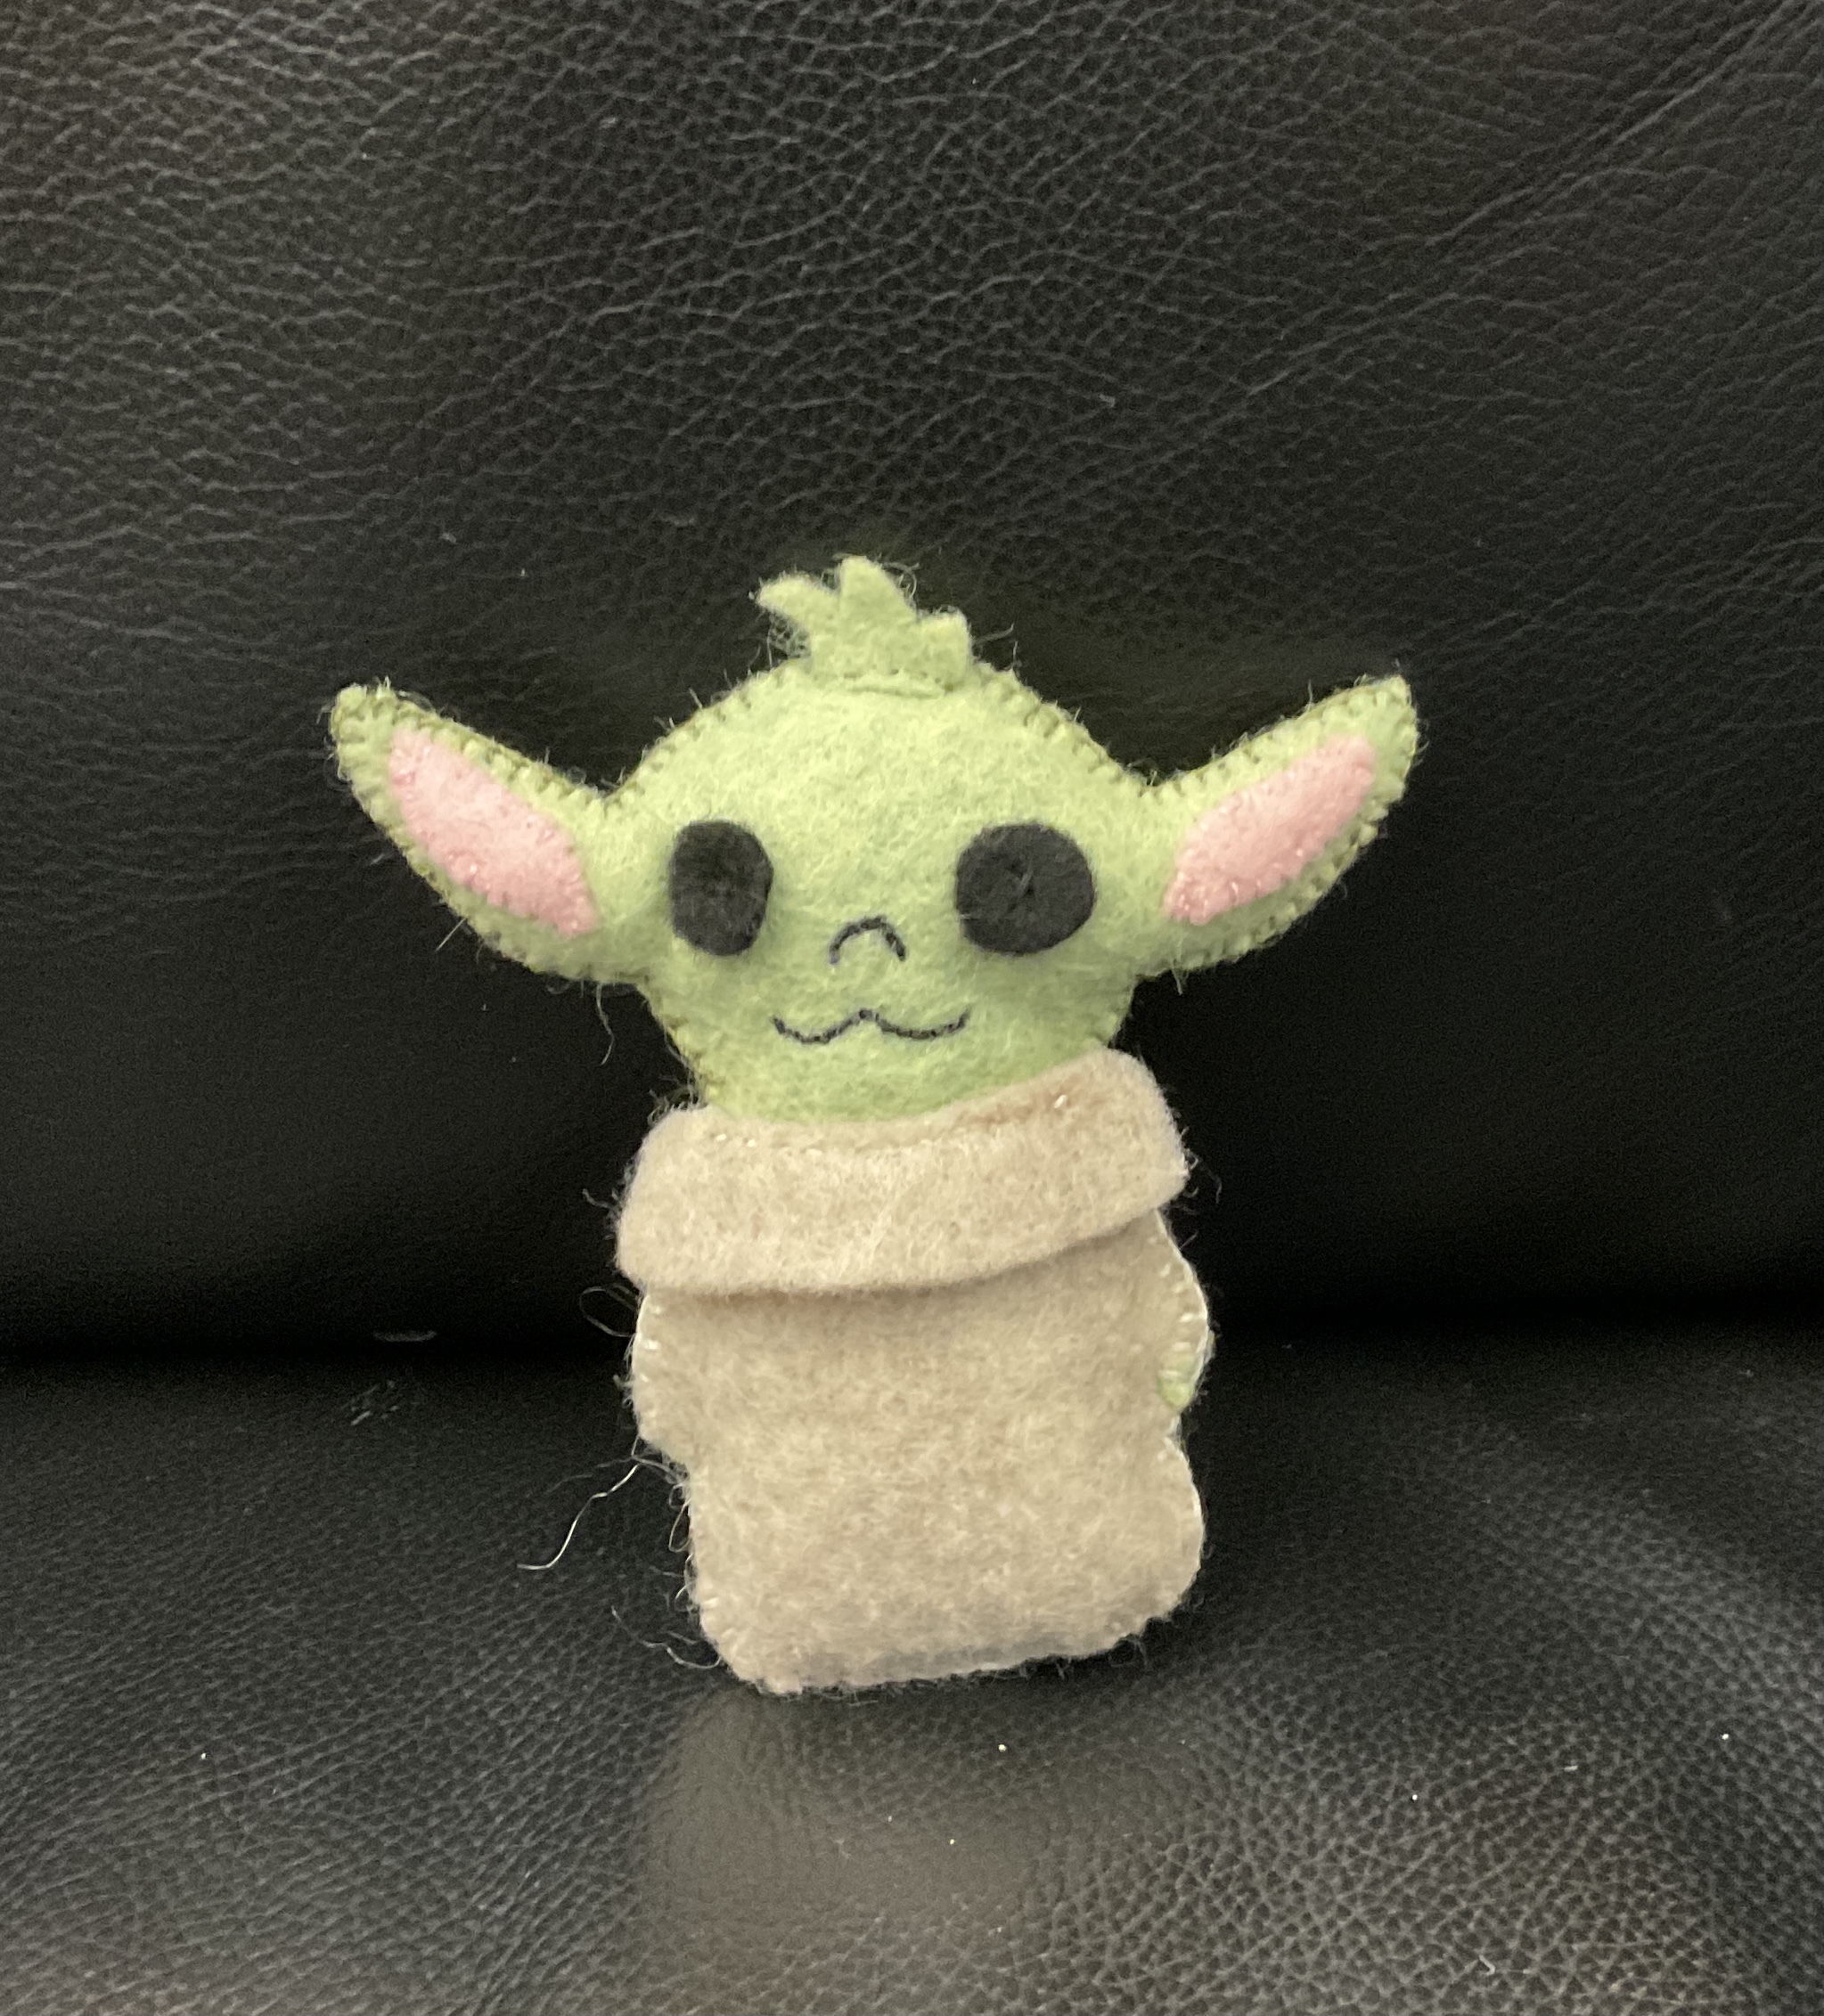 A sewn baby yoda plush.